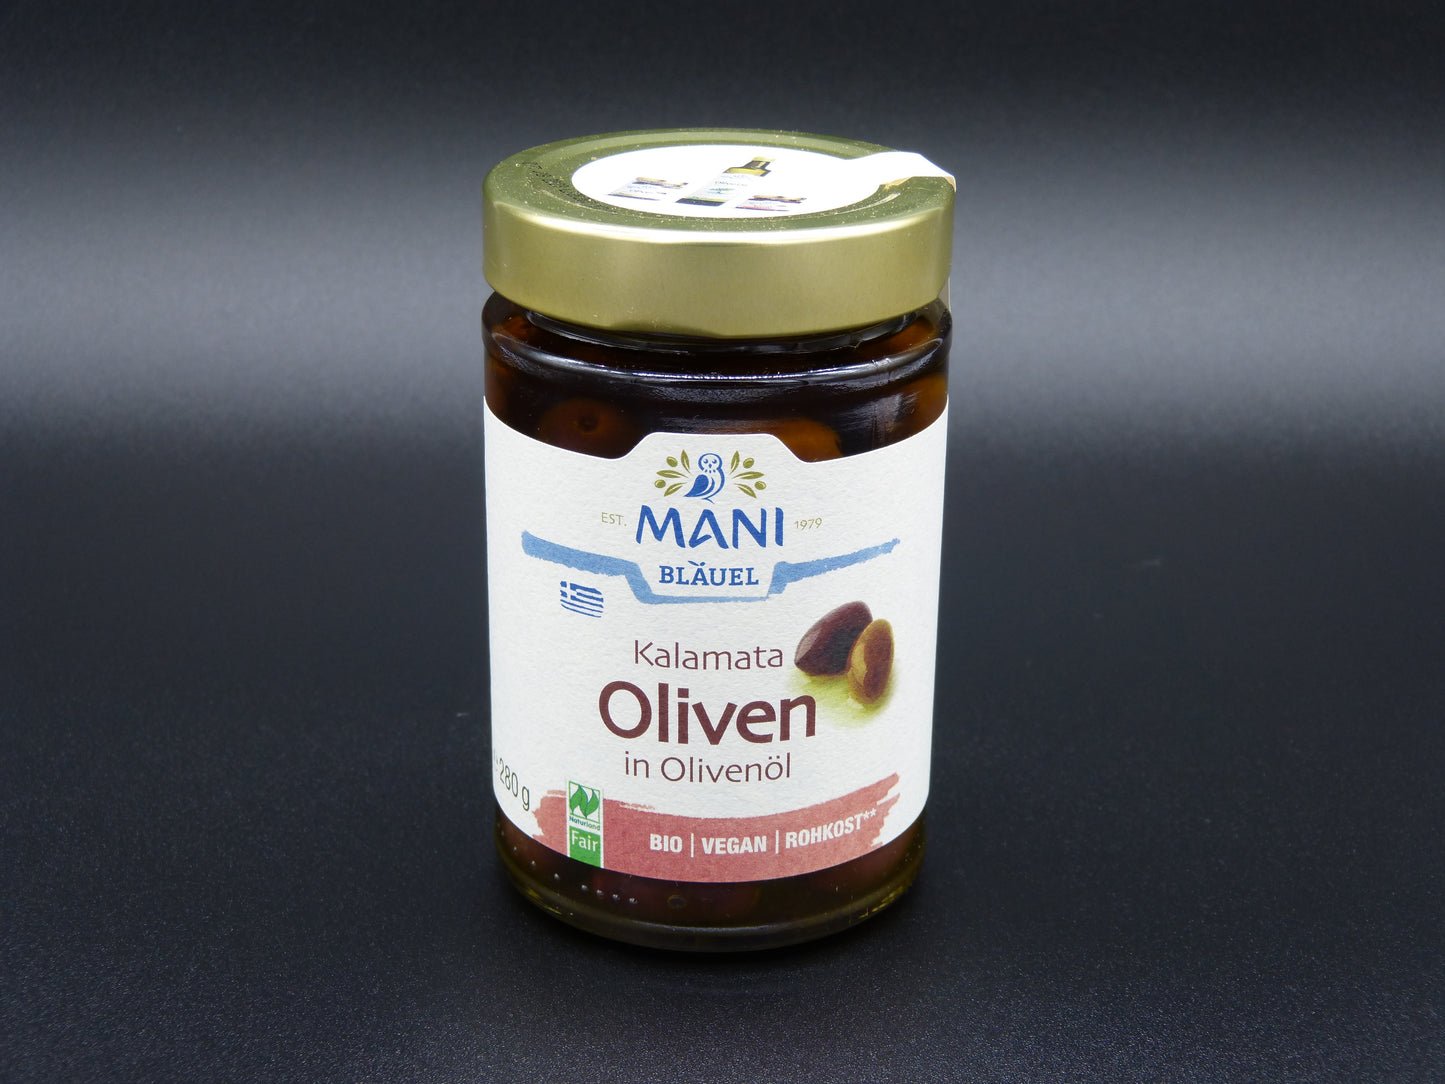 Kalamata Oliven in Olivenöl